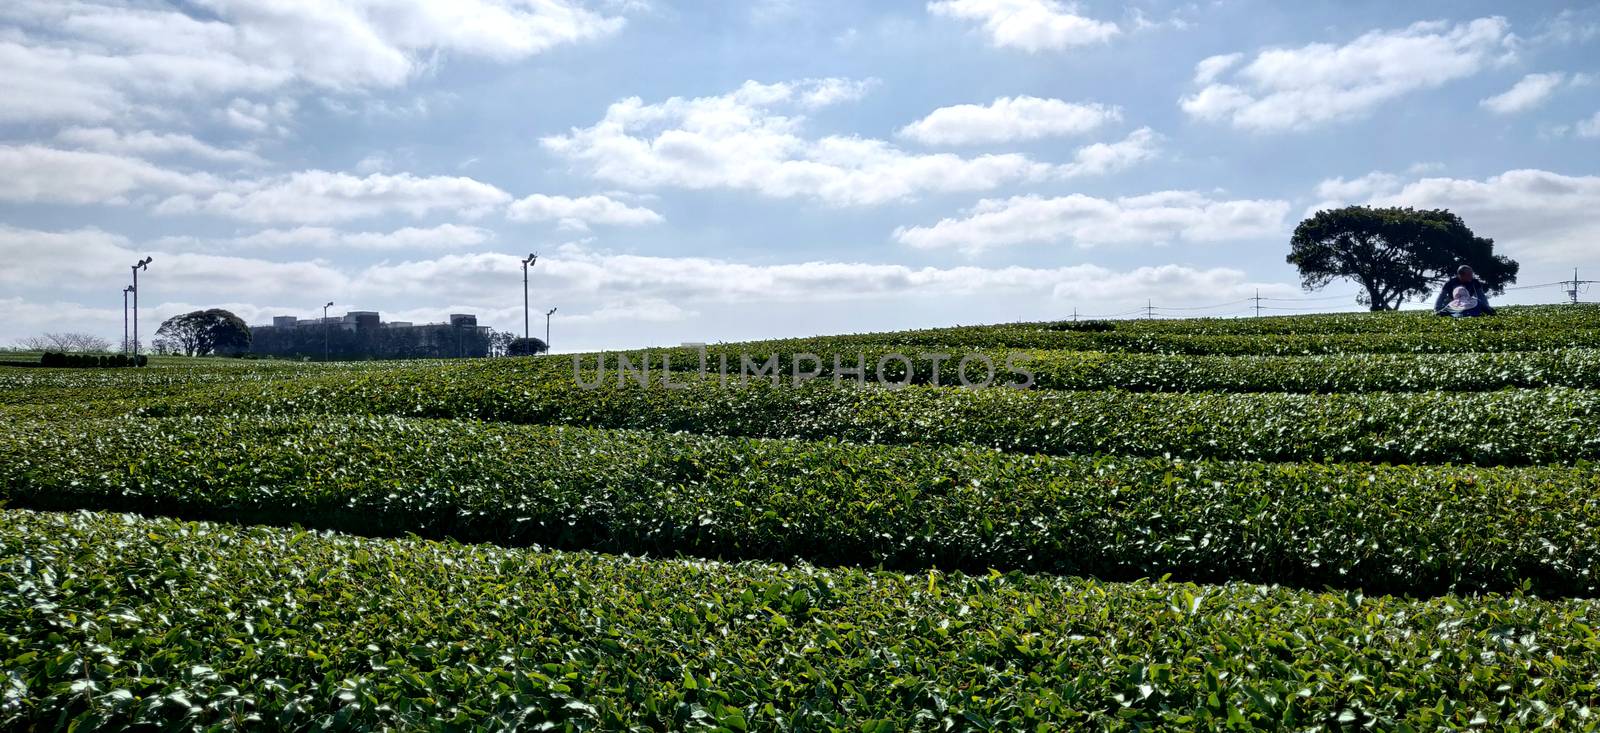 Tea garden against clear blue sky by mshivangi92